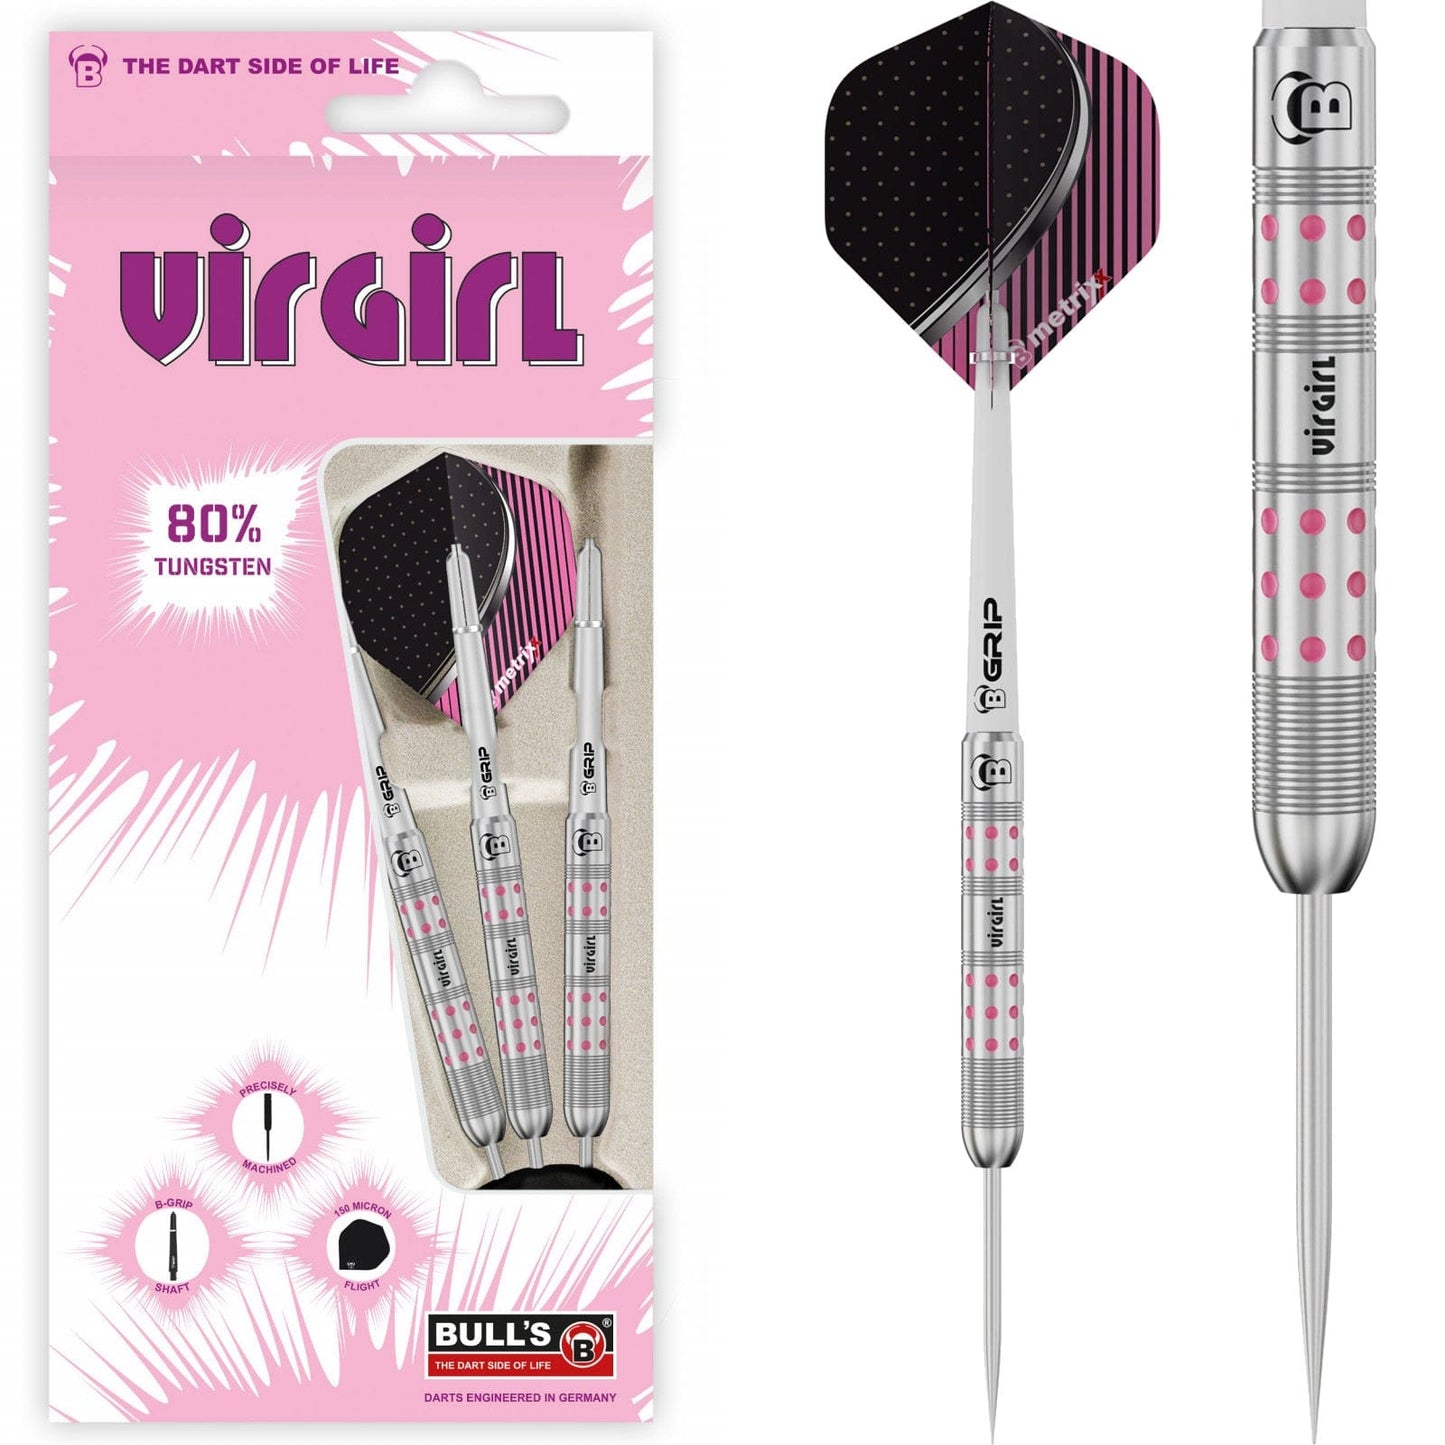 BULL'S Virgirl VR1 Darts - Steel Tip - 80% Tungsten - Dot Grip 21g